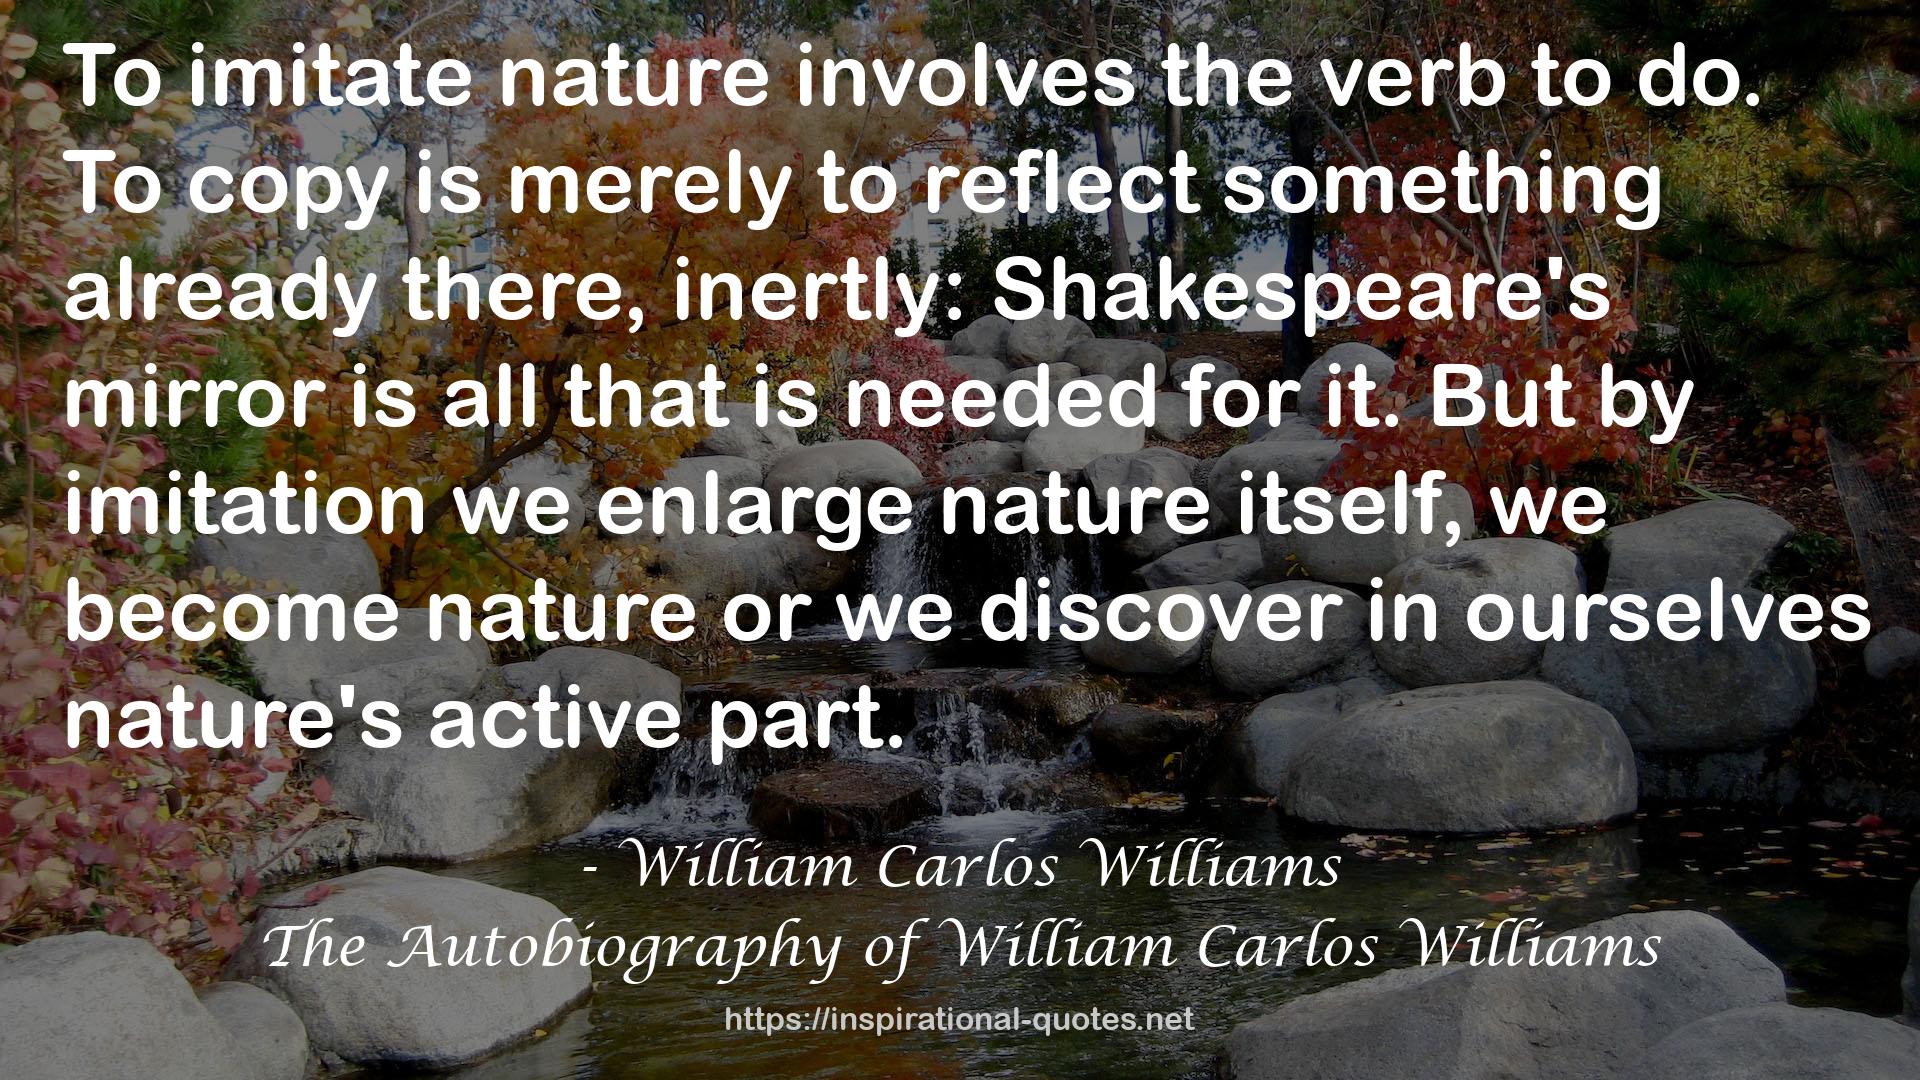 The Autobiography of William Carlos Williams QUOTES